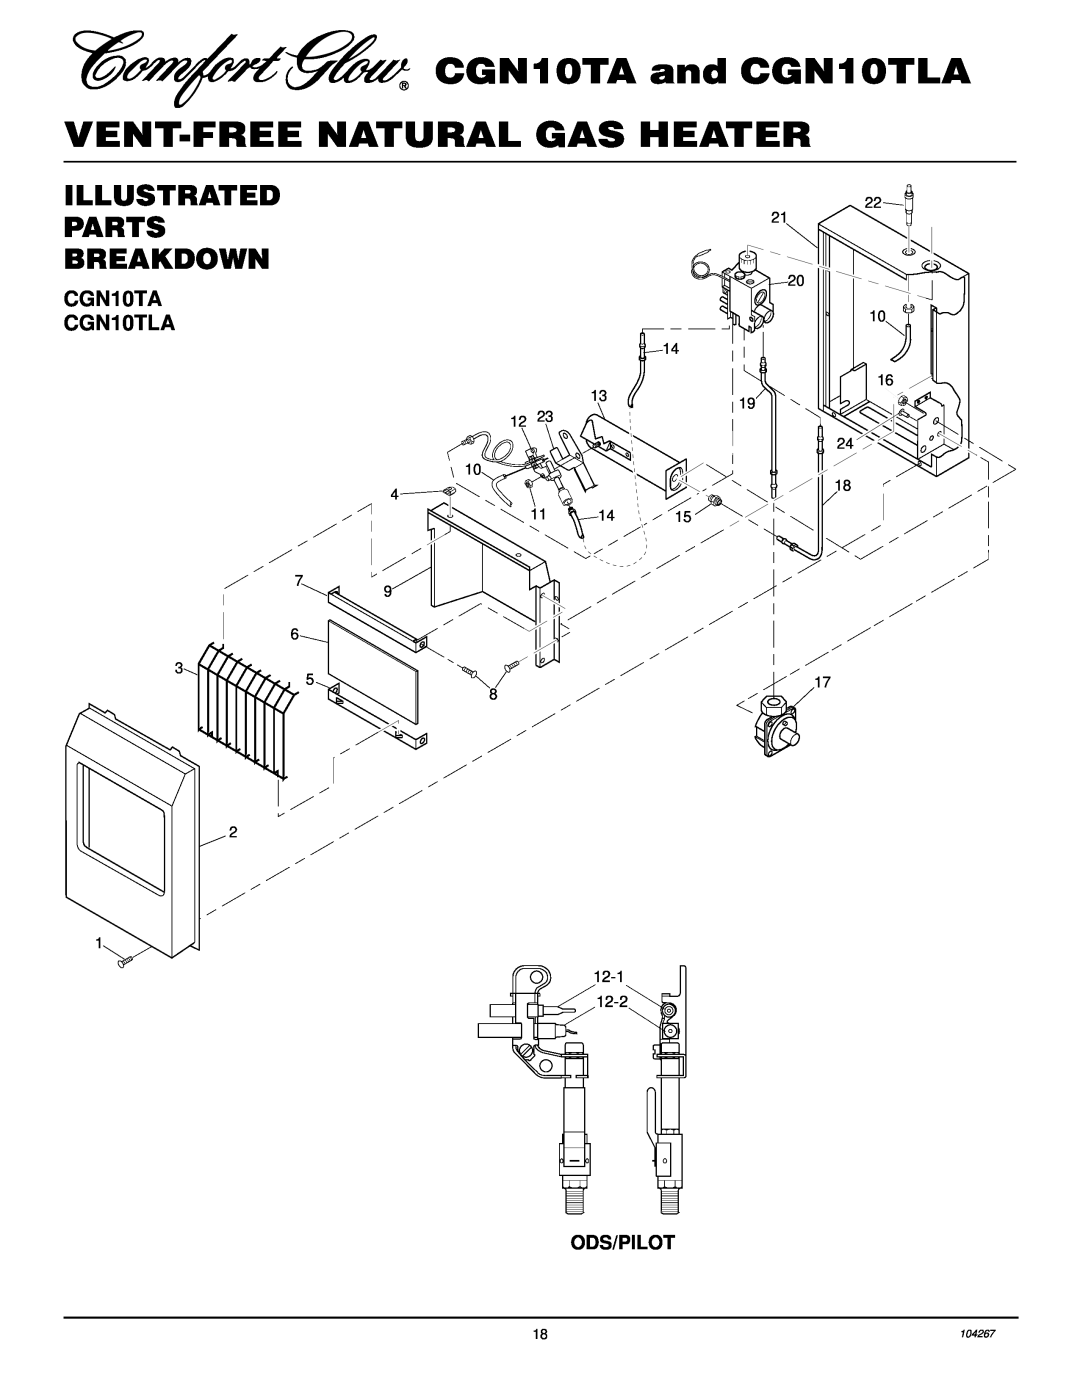 Desa installation manual Illustrated, Parts, Breakdown, CGN10TA and CGN10TLA VENT-FREENATURAL GAS HEATER 